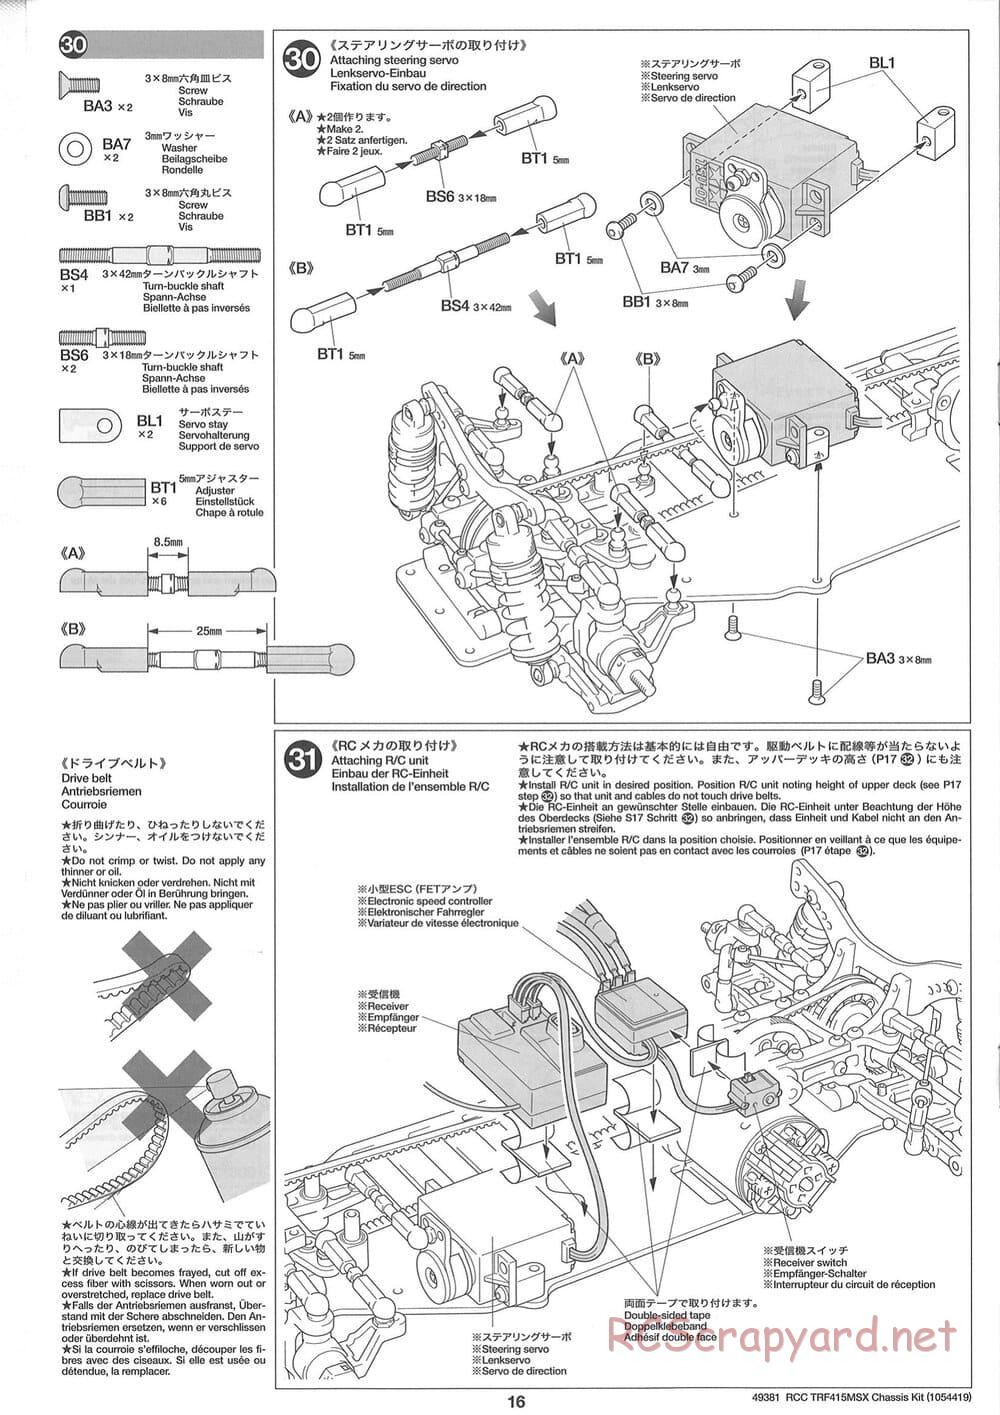 Tamiya - TRF415-MSX Chassis - Manual - Page 16